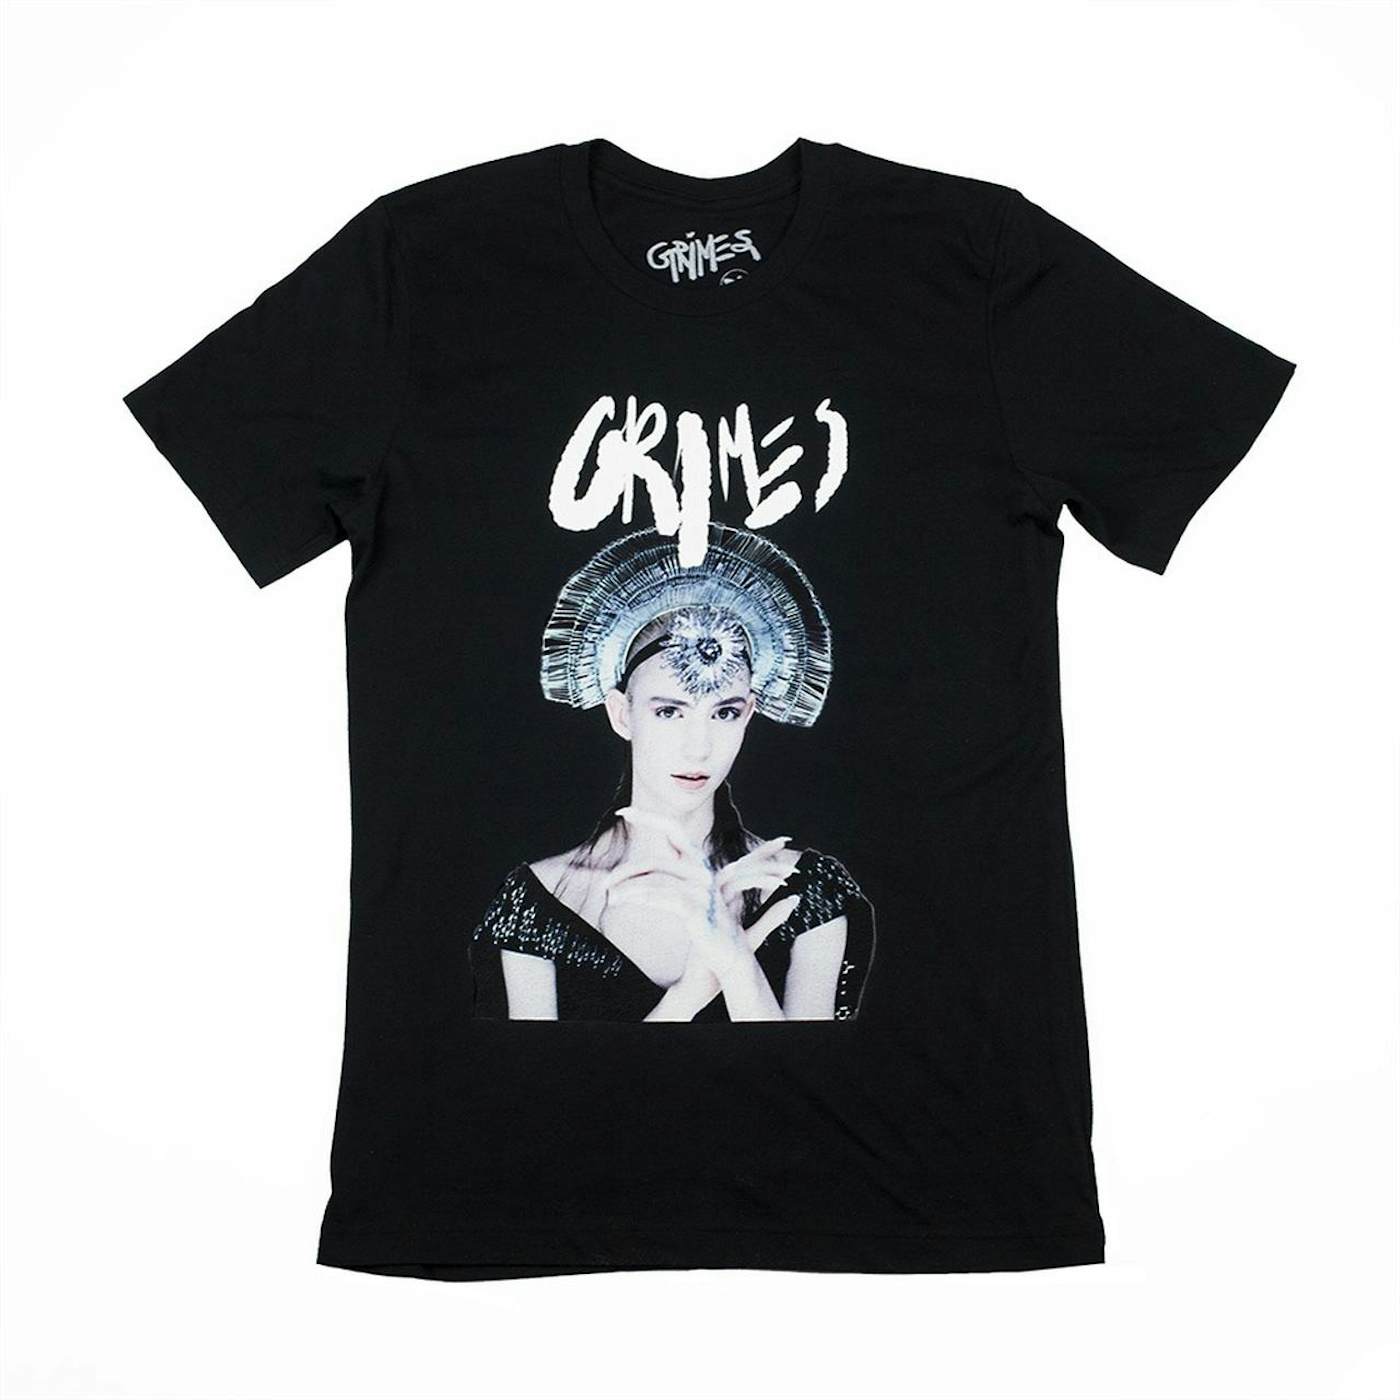 Grimes Head Dress T-Shirt